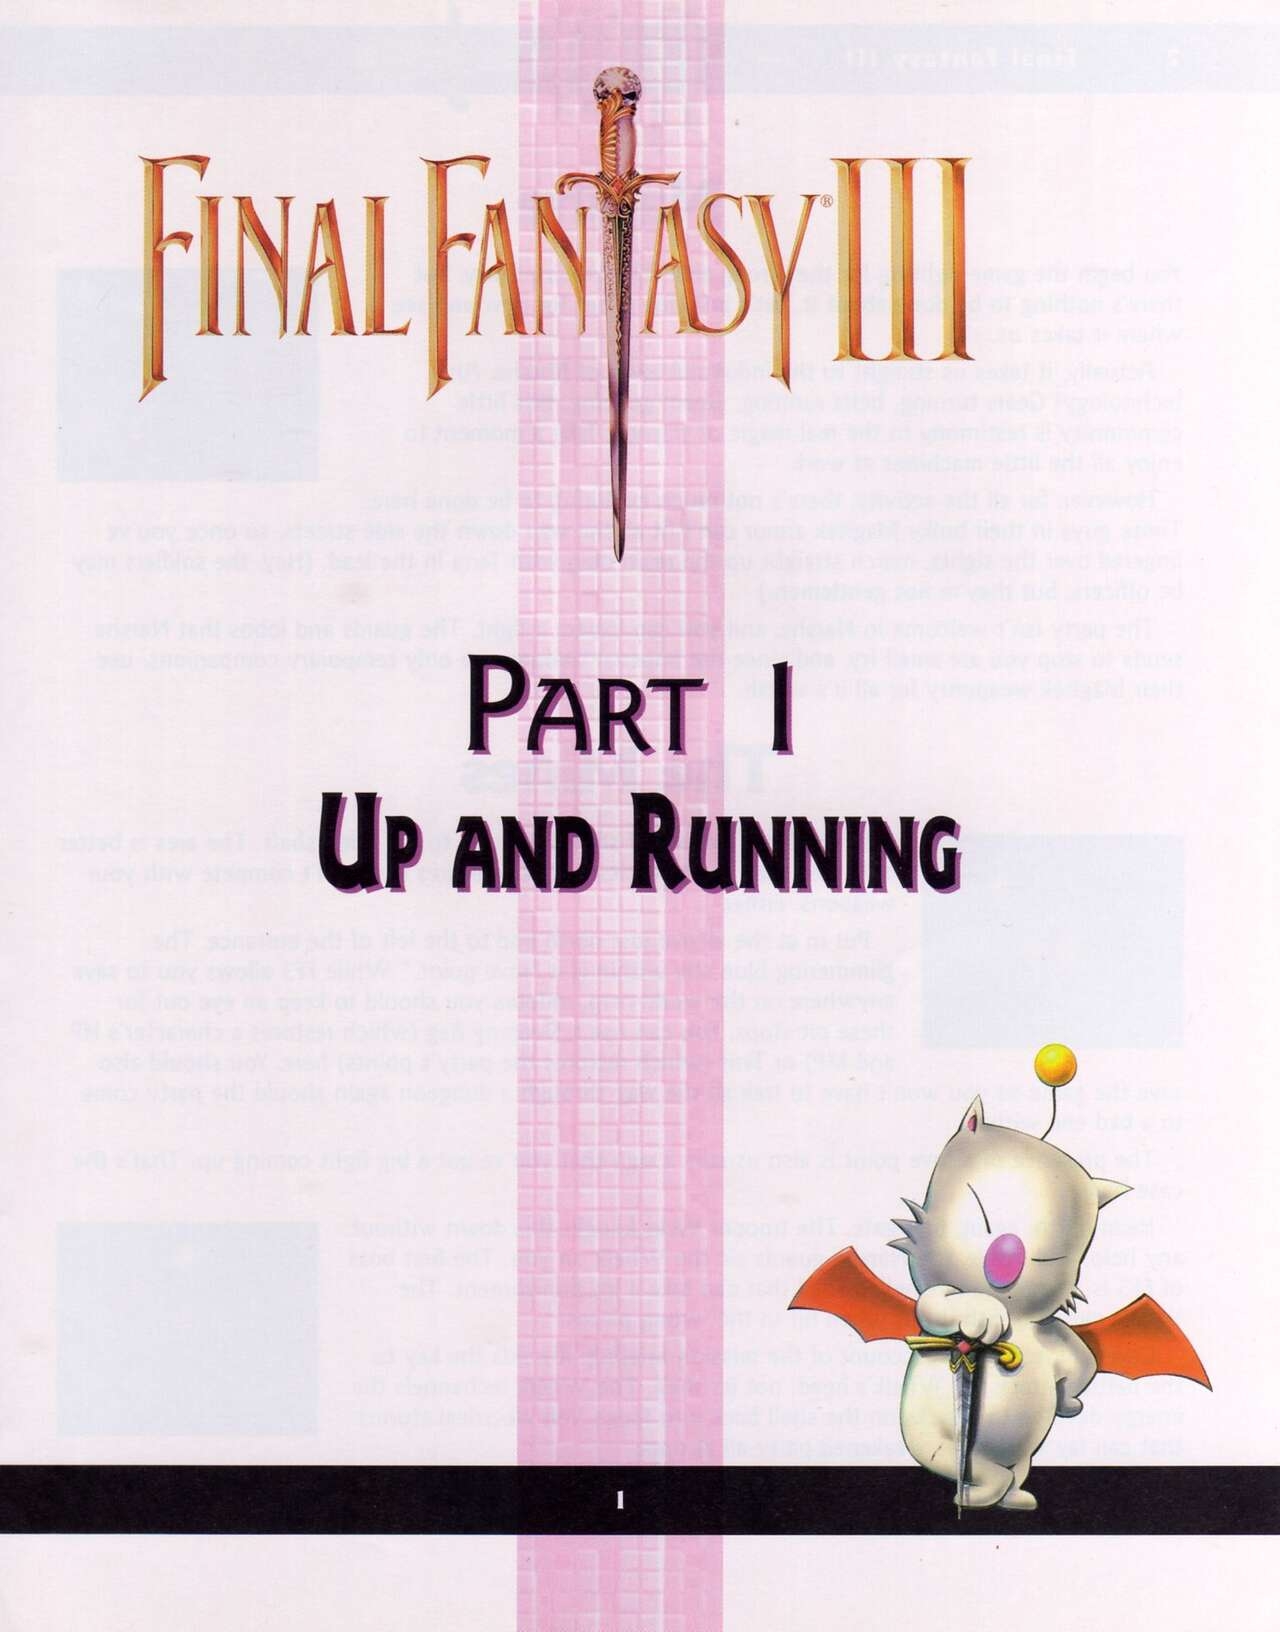 Final Fantasy III Players Guide 18